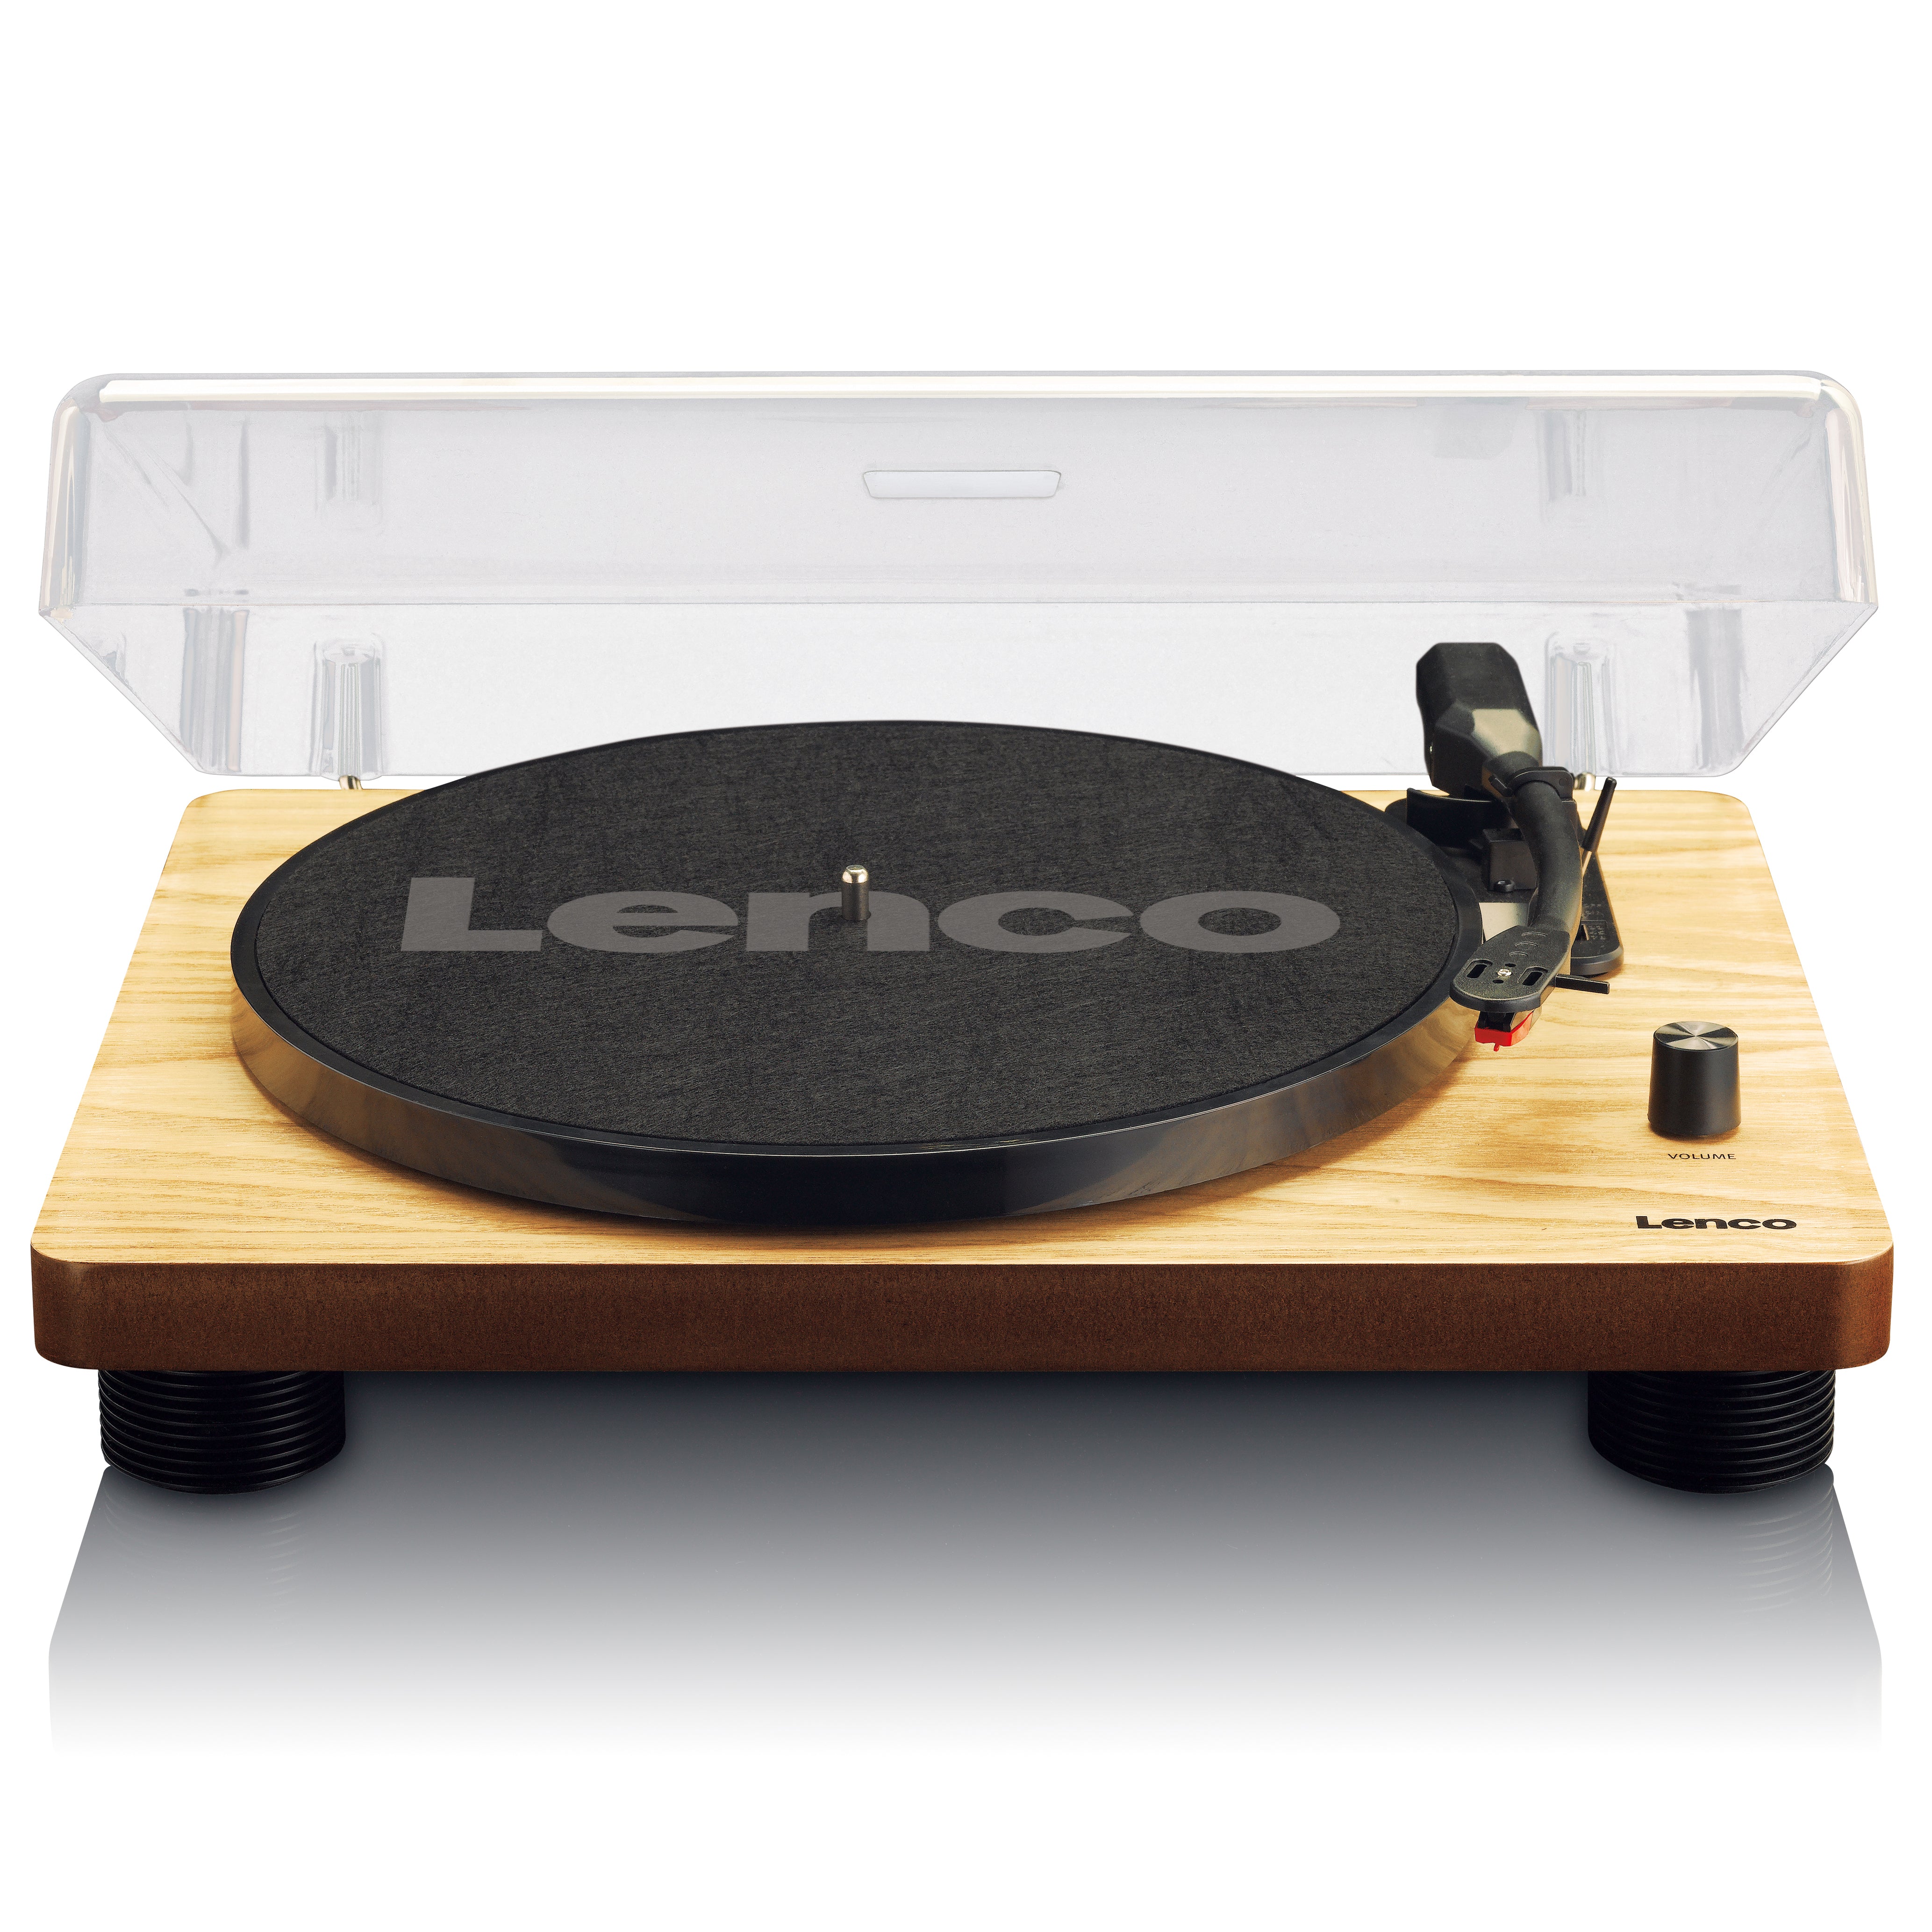 LS-50 Lenco.de - kaufen? Webshop offiziellen – Lenco Jetzt im Offizieller | Lenco Webshop